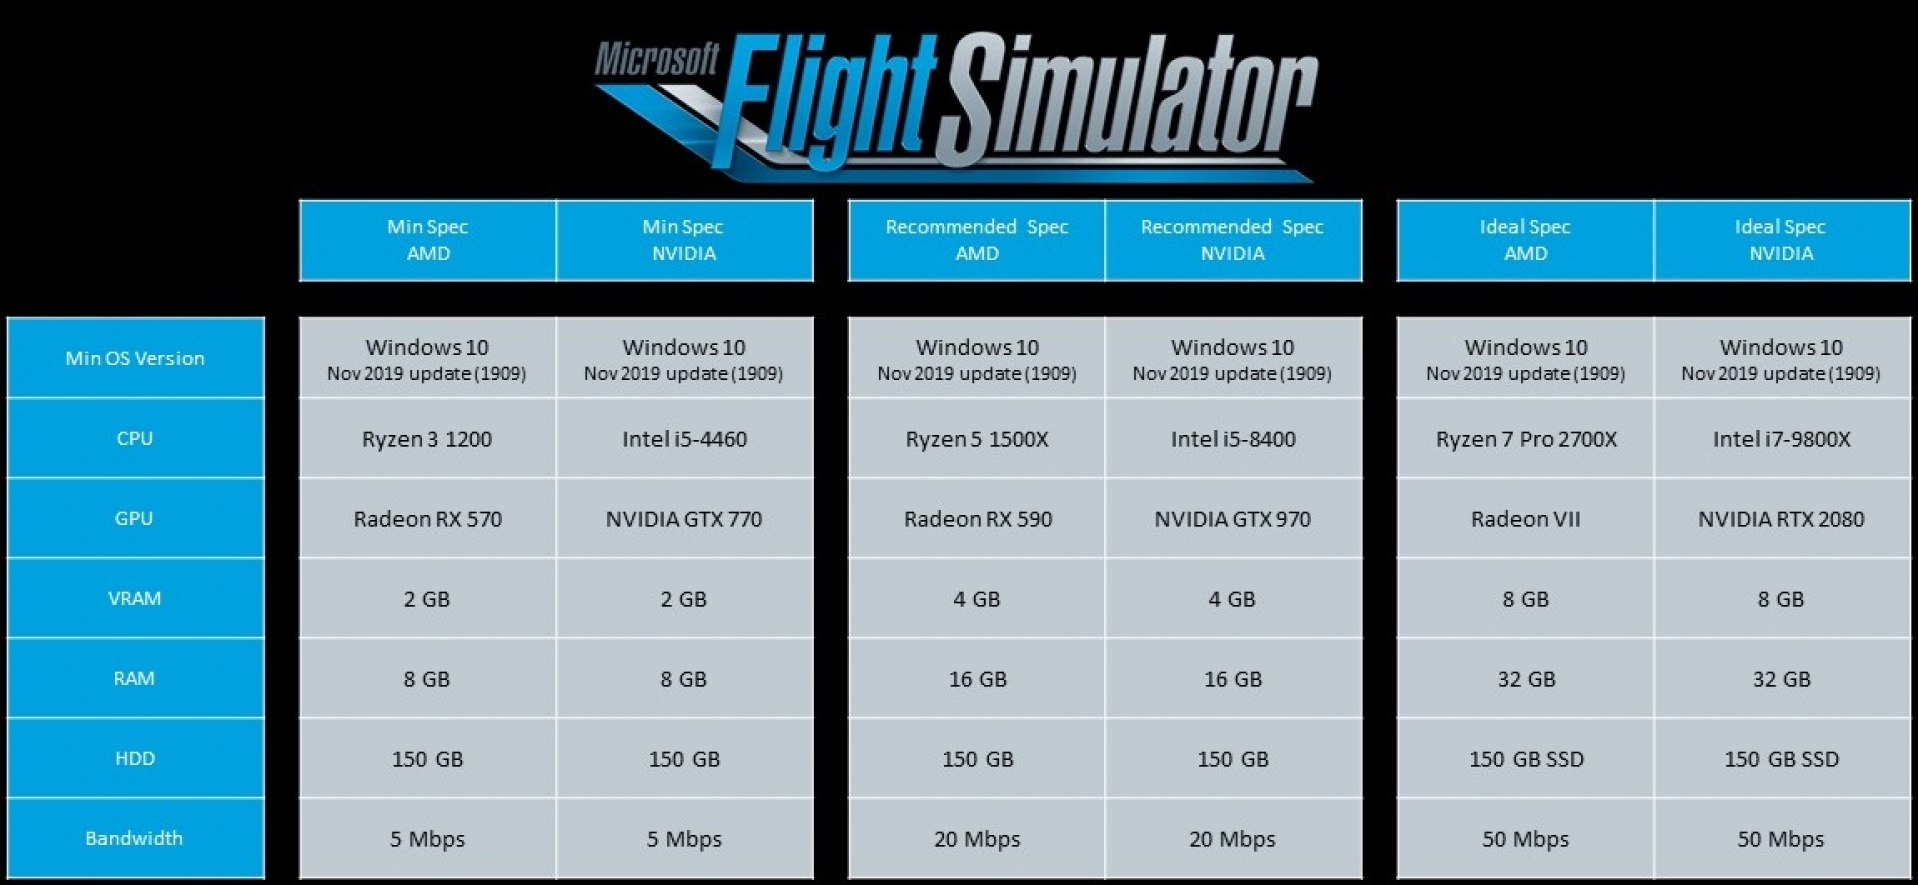 Microsoft Flight Simulator Requisiti Hardware